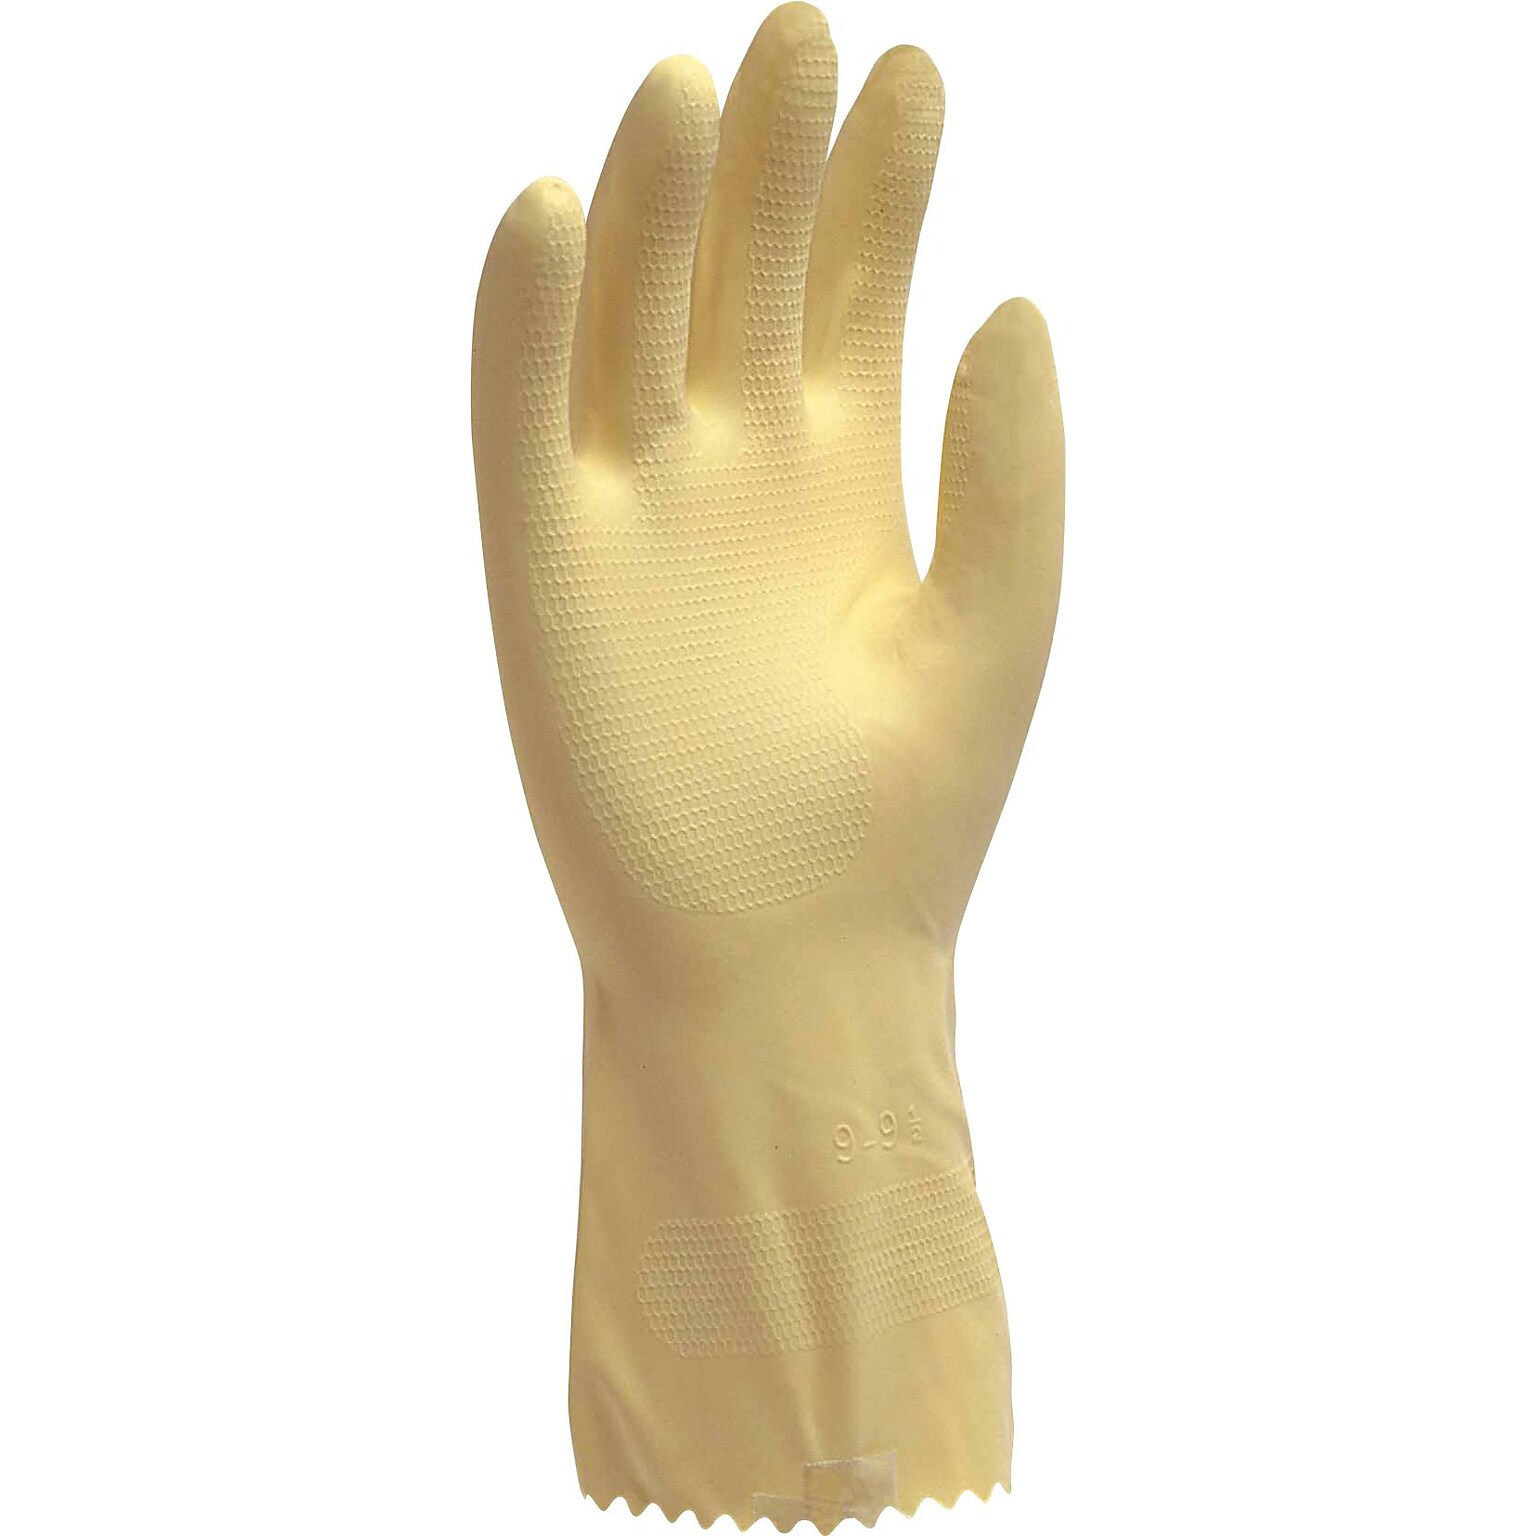 Ambitex® Flock Lined Powder Free Rubber Gloves, Latex, Medium, Yellow, 12 Pairs (LMD6500)